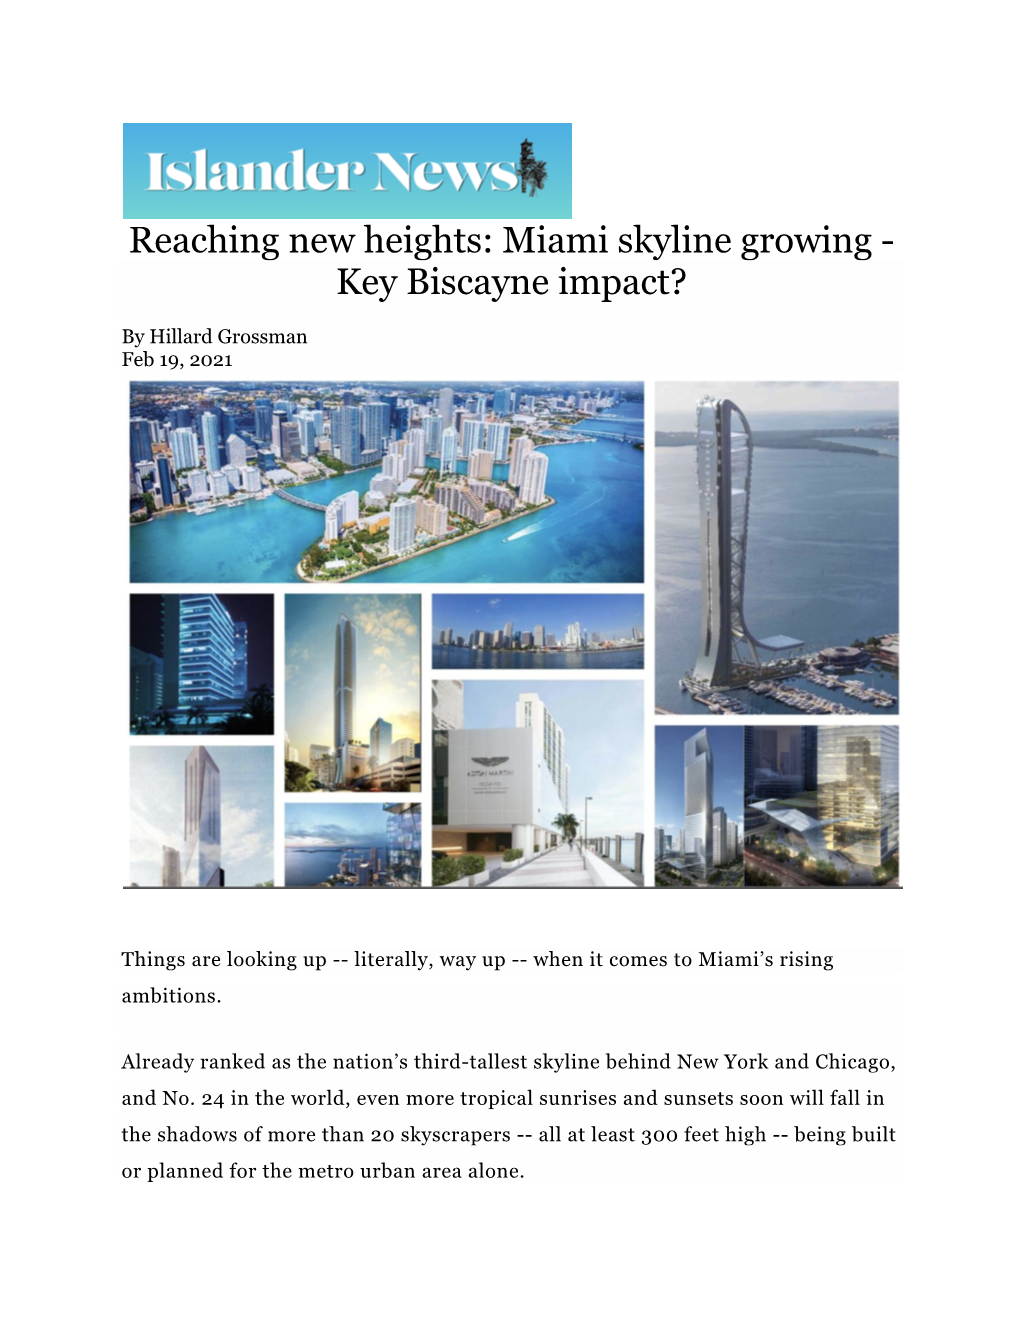 Reaching New Heights: Miami Skyline Growing - Key Biscayne Impact?